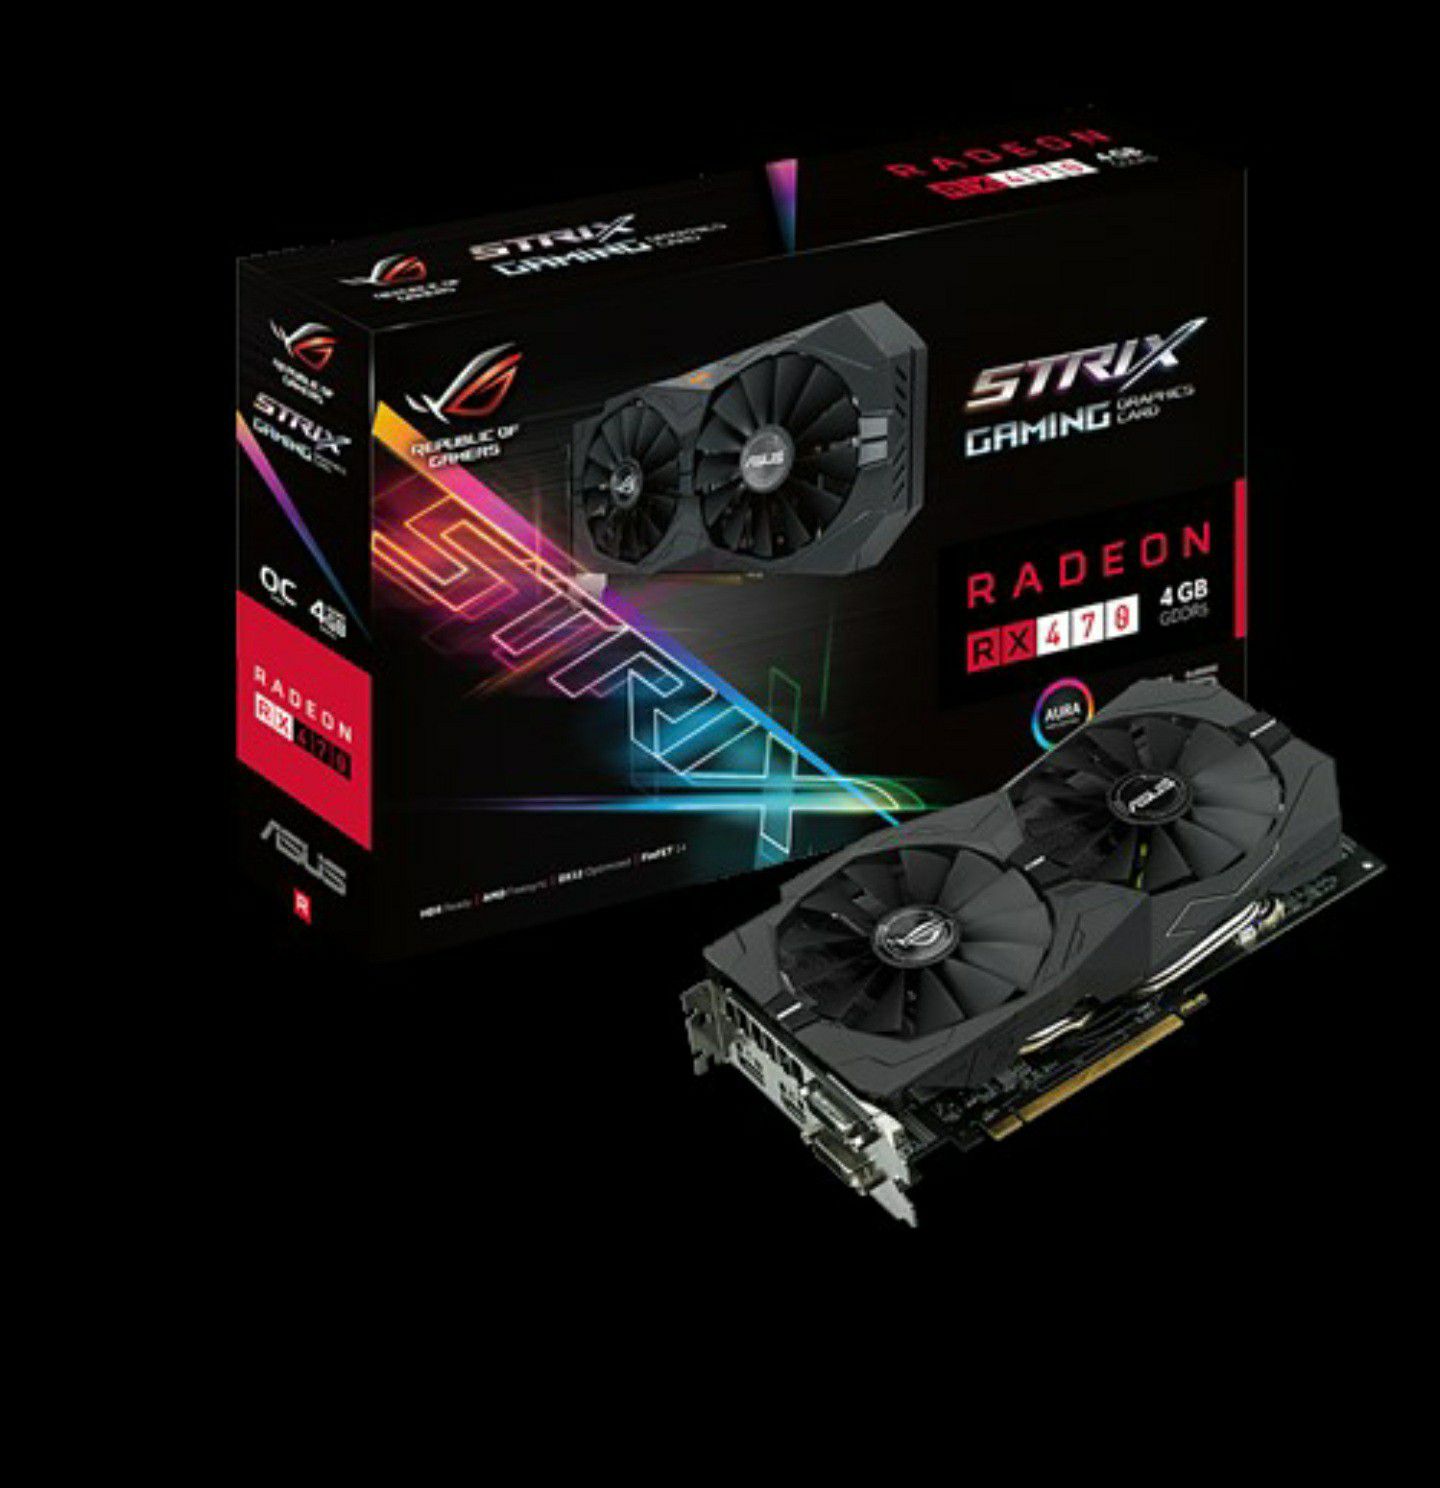 ASUS ROG Strix Radeon Rx 470 4GB OC Edition AMD Graphics Card with DP 1.4 HDMI 2.0 (STRIX-RX470-O4G-GAMING)